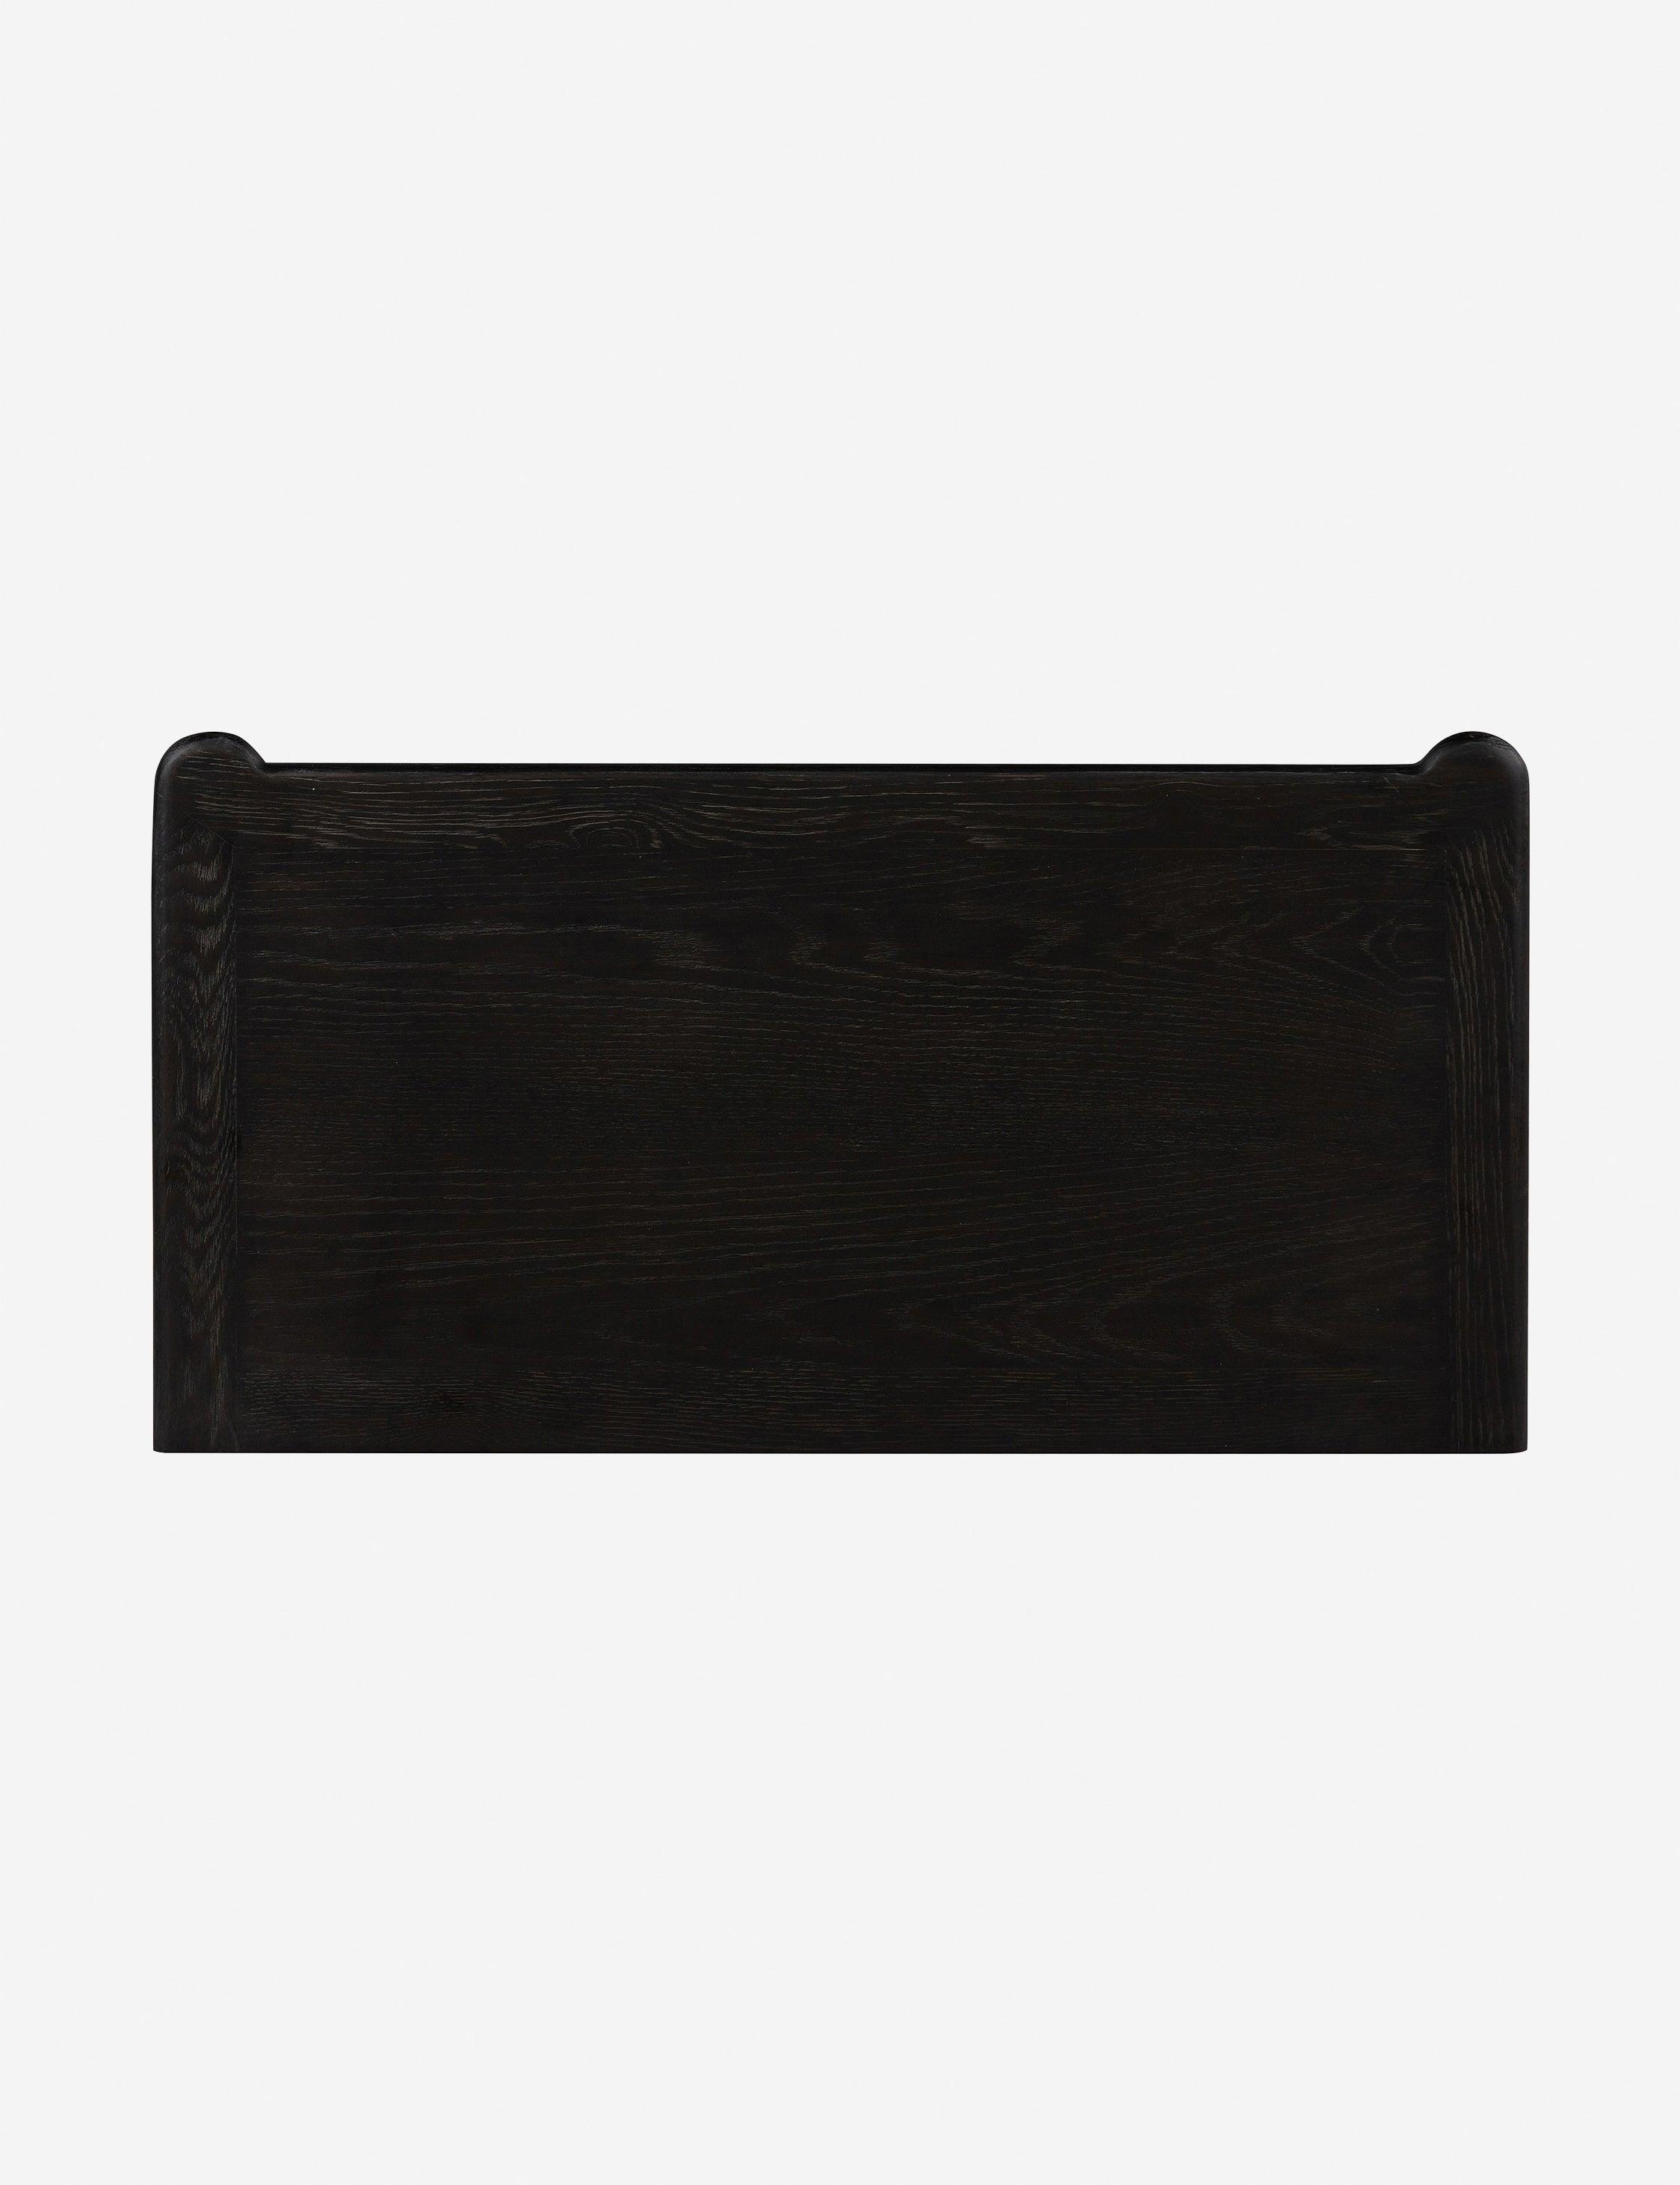 Tacorey Rustic Black Solid Oak 1-Drawer Nightstand